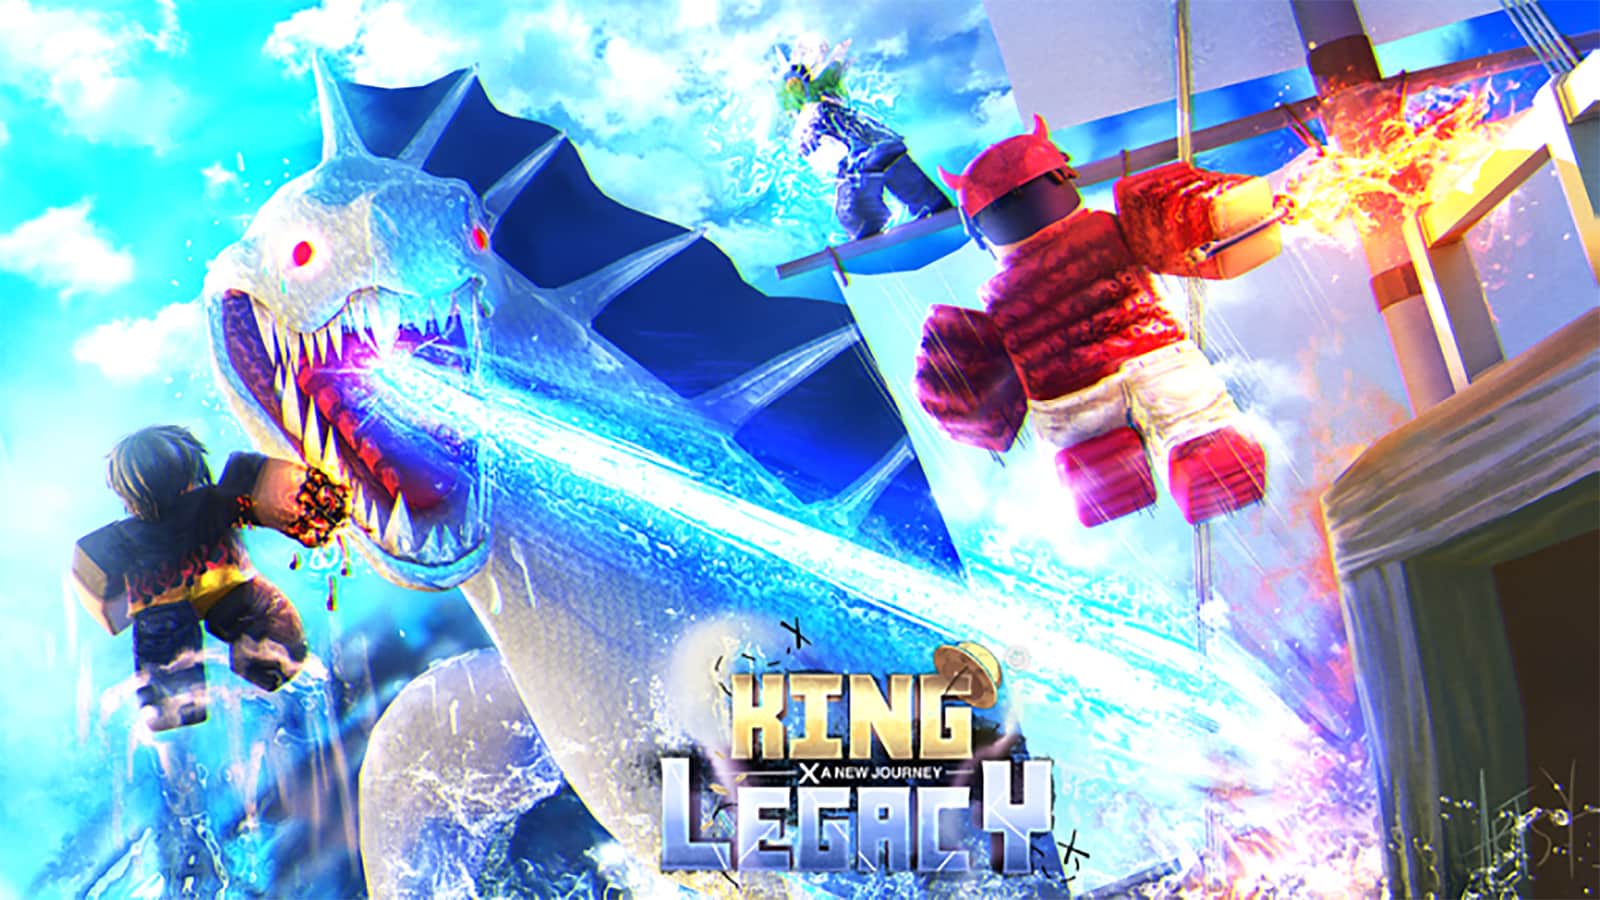 code king legacy update 4